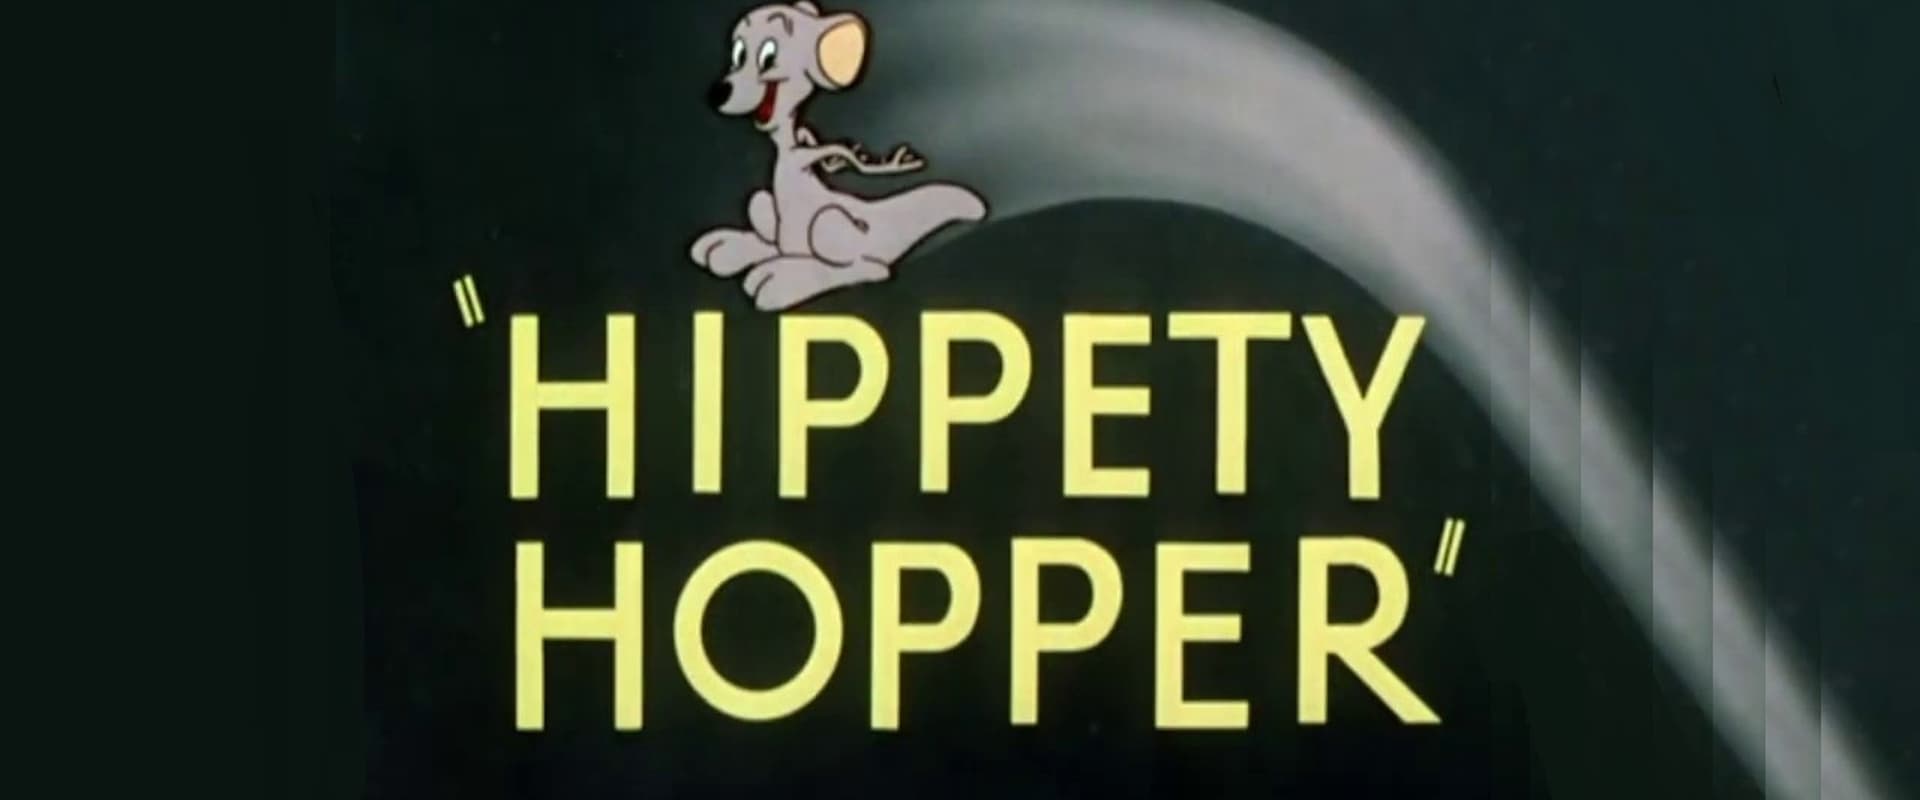 Hippety Hopper